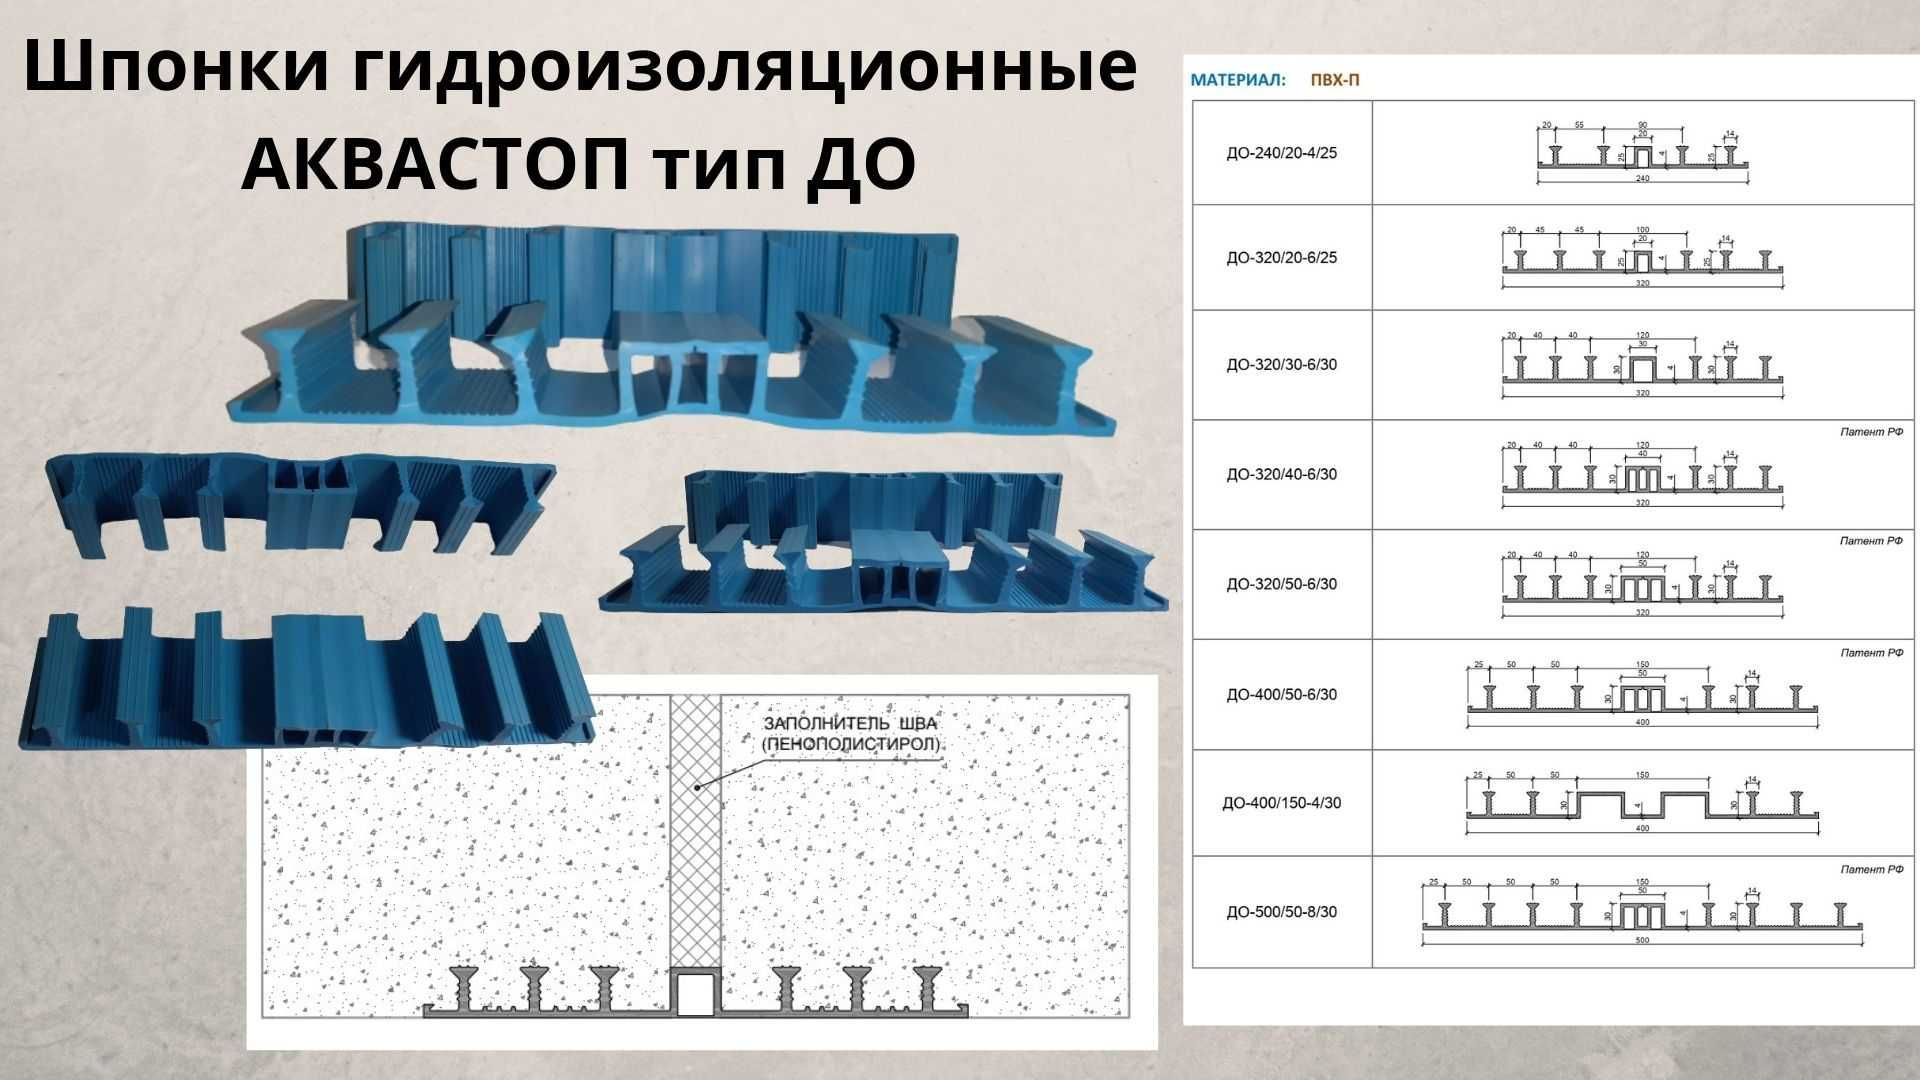 АКВАСТОП тип ДО 320/50-6/30 Шпонка гидроизоляционные Аквабарьер